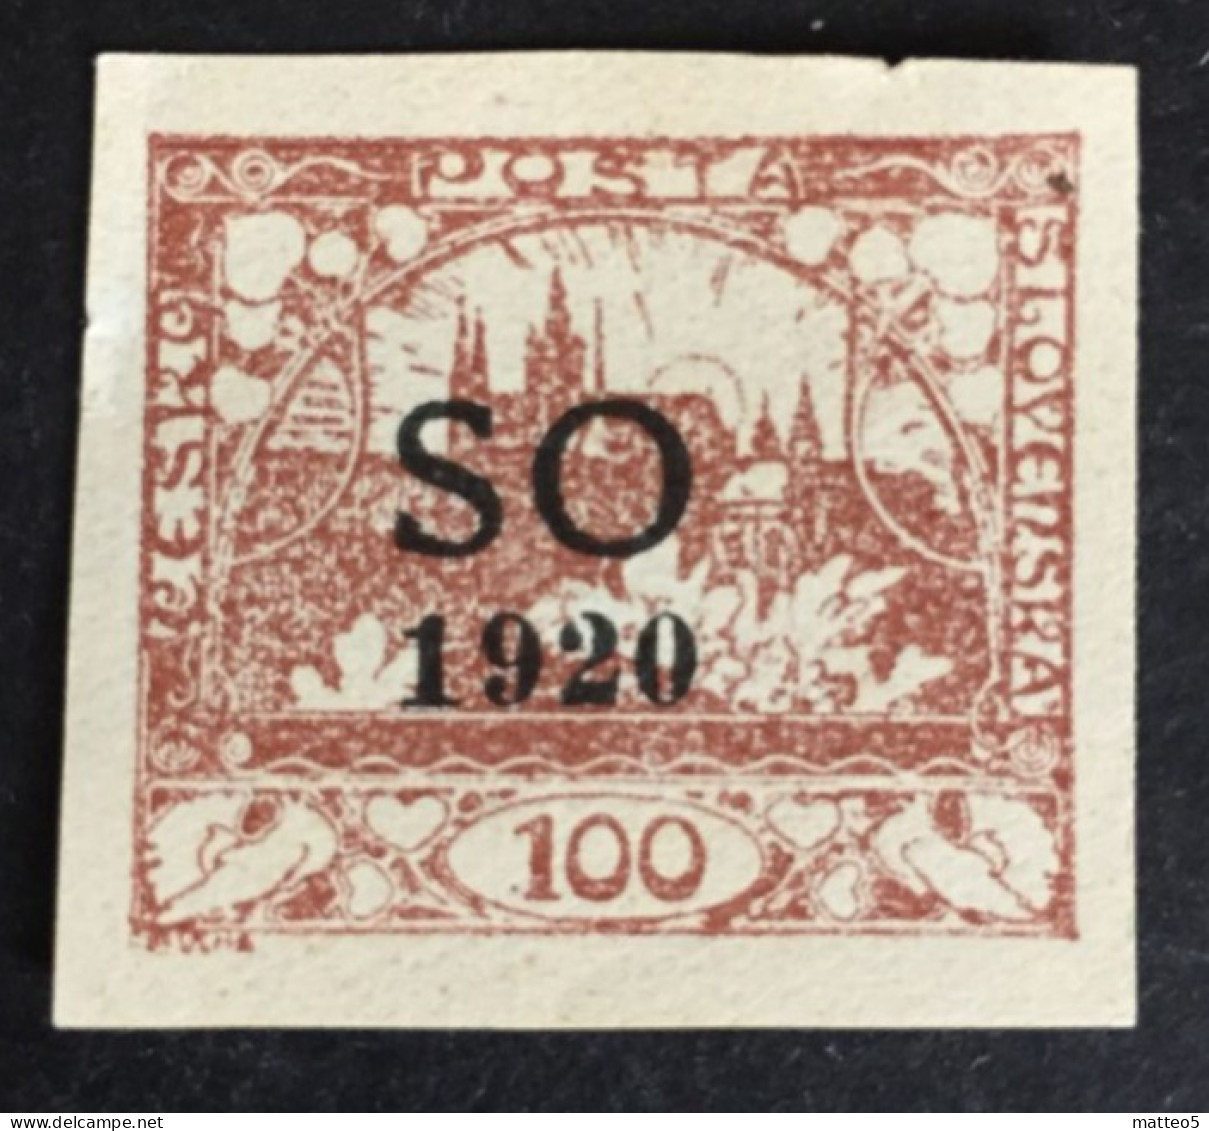 1920 Poland Eastern Silesia Czechoslovakia - Hradcany At Prague Overprint SO 100 - Unused ( Mint Hinged) - Slesia